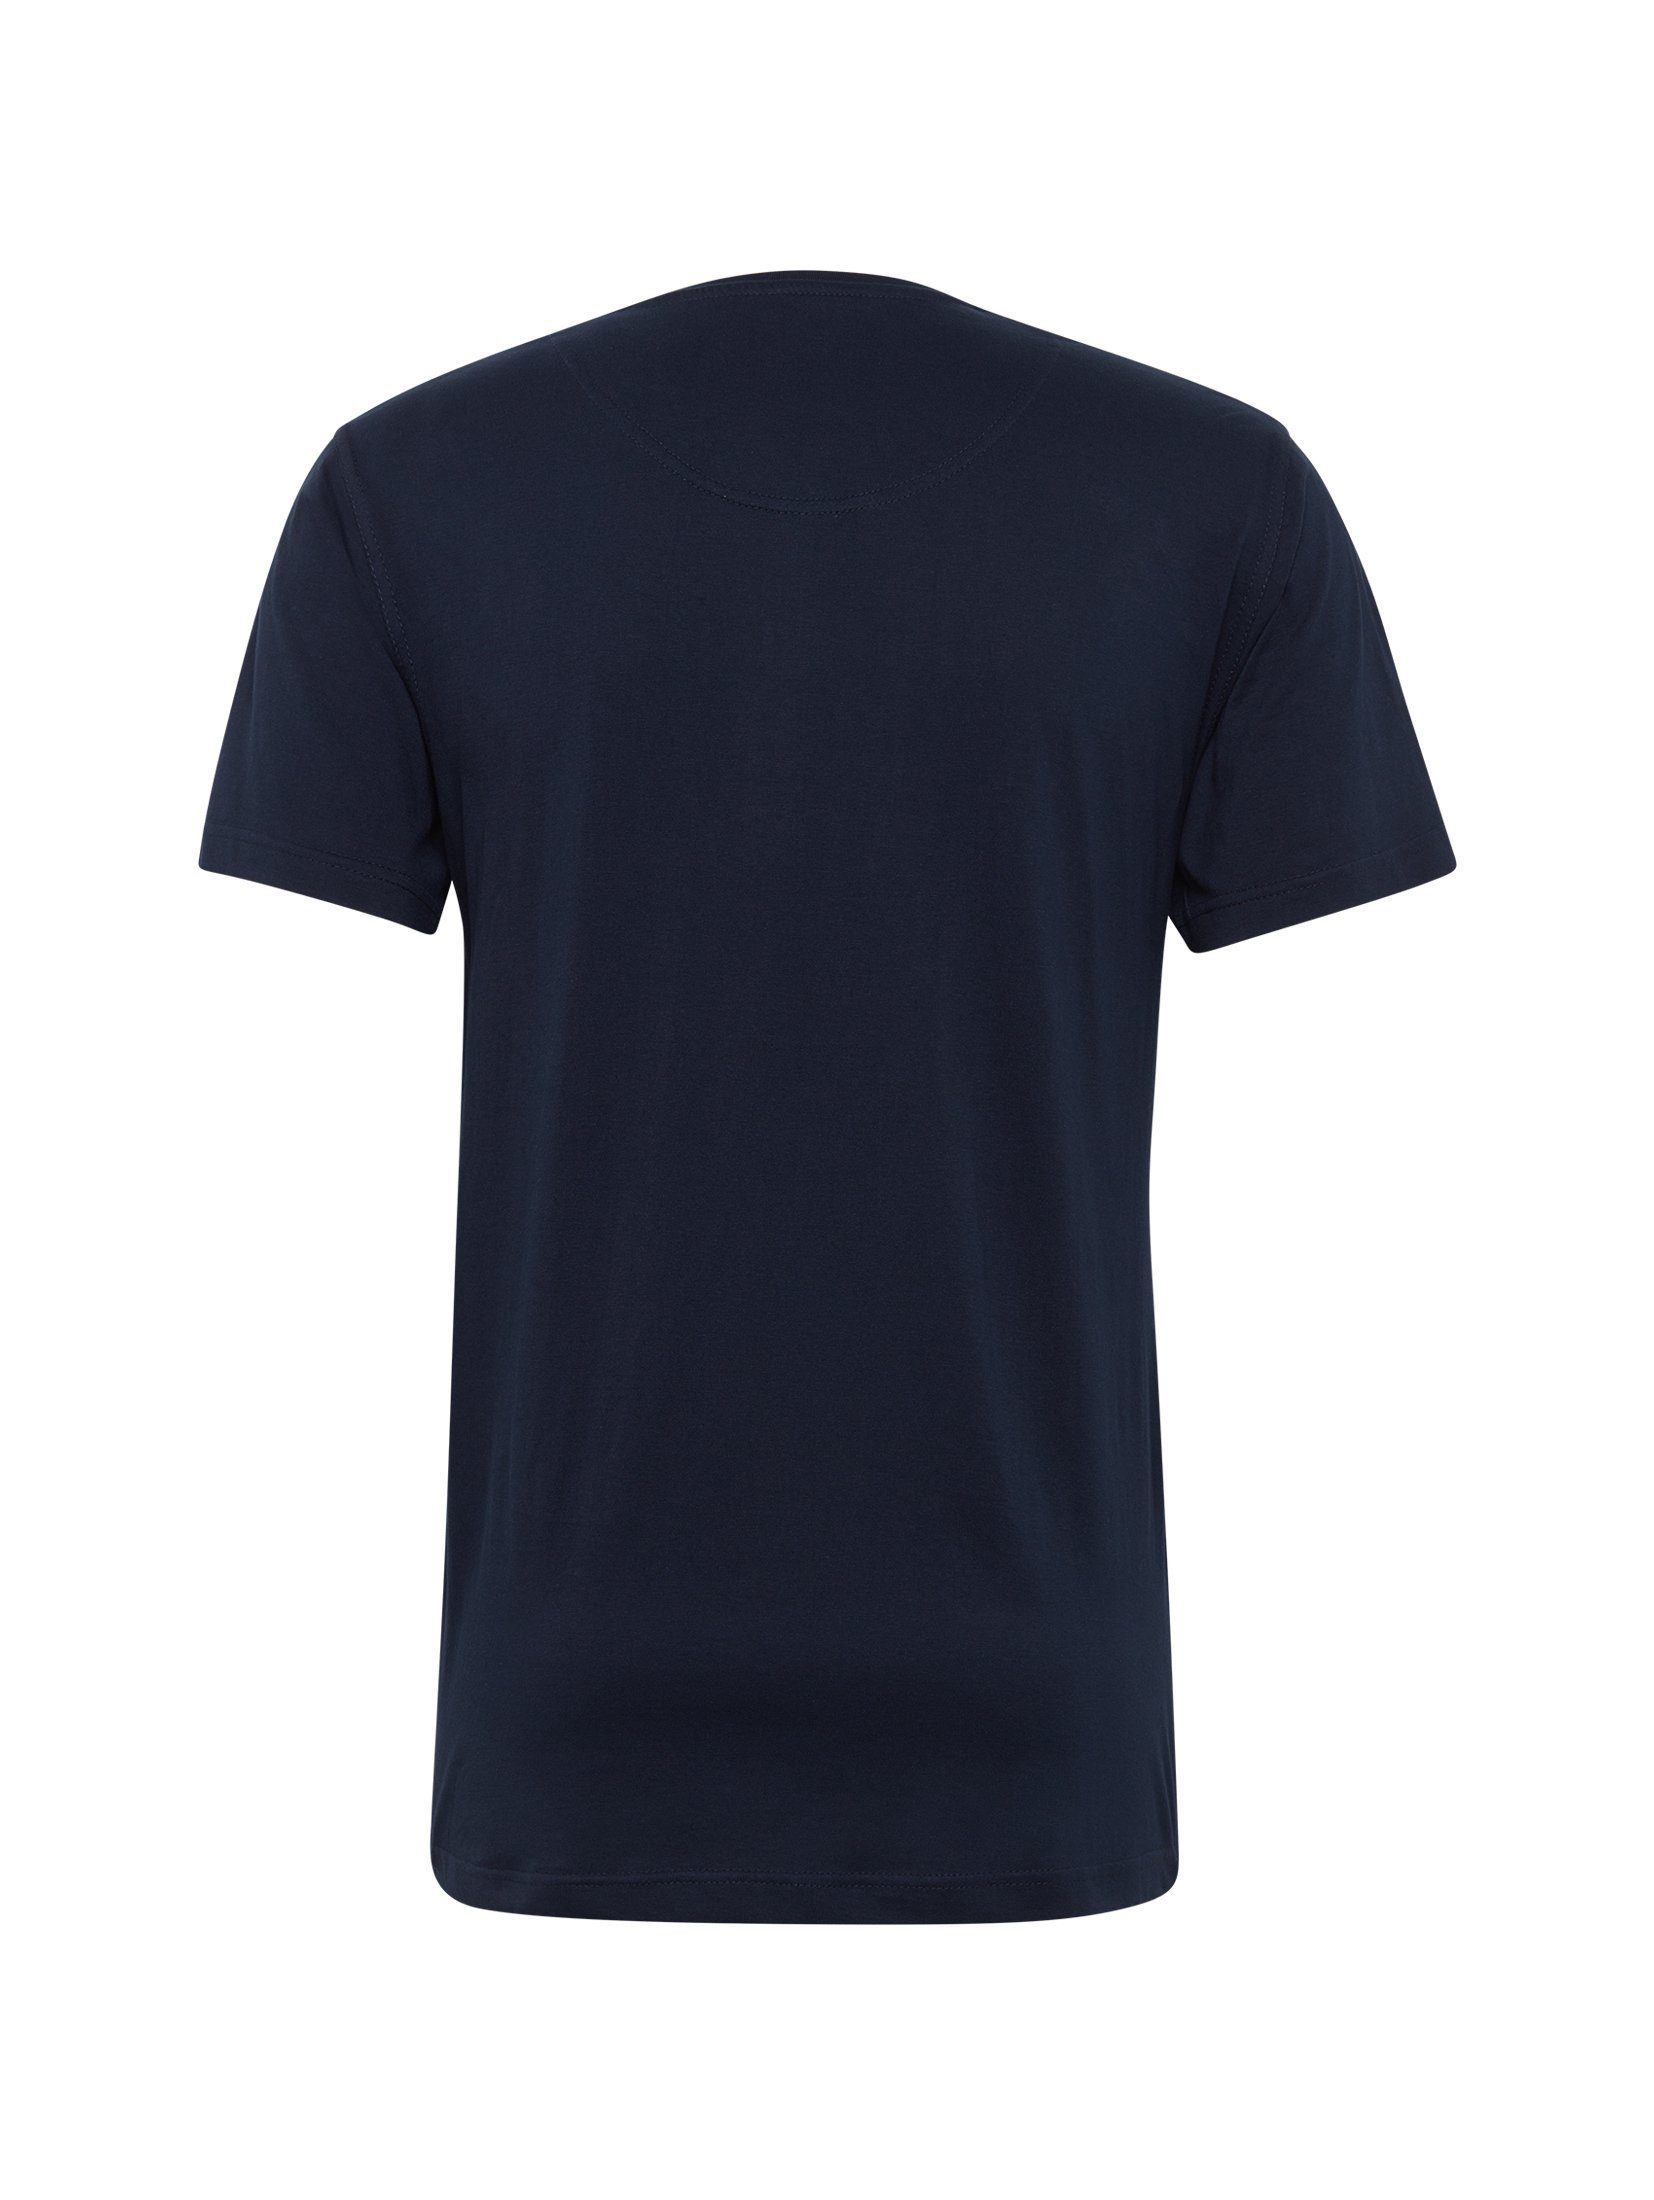 T-Shirt TAILOR blau-dunkel-uni Pyjamaoberteil Pyjama TOM